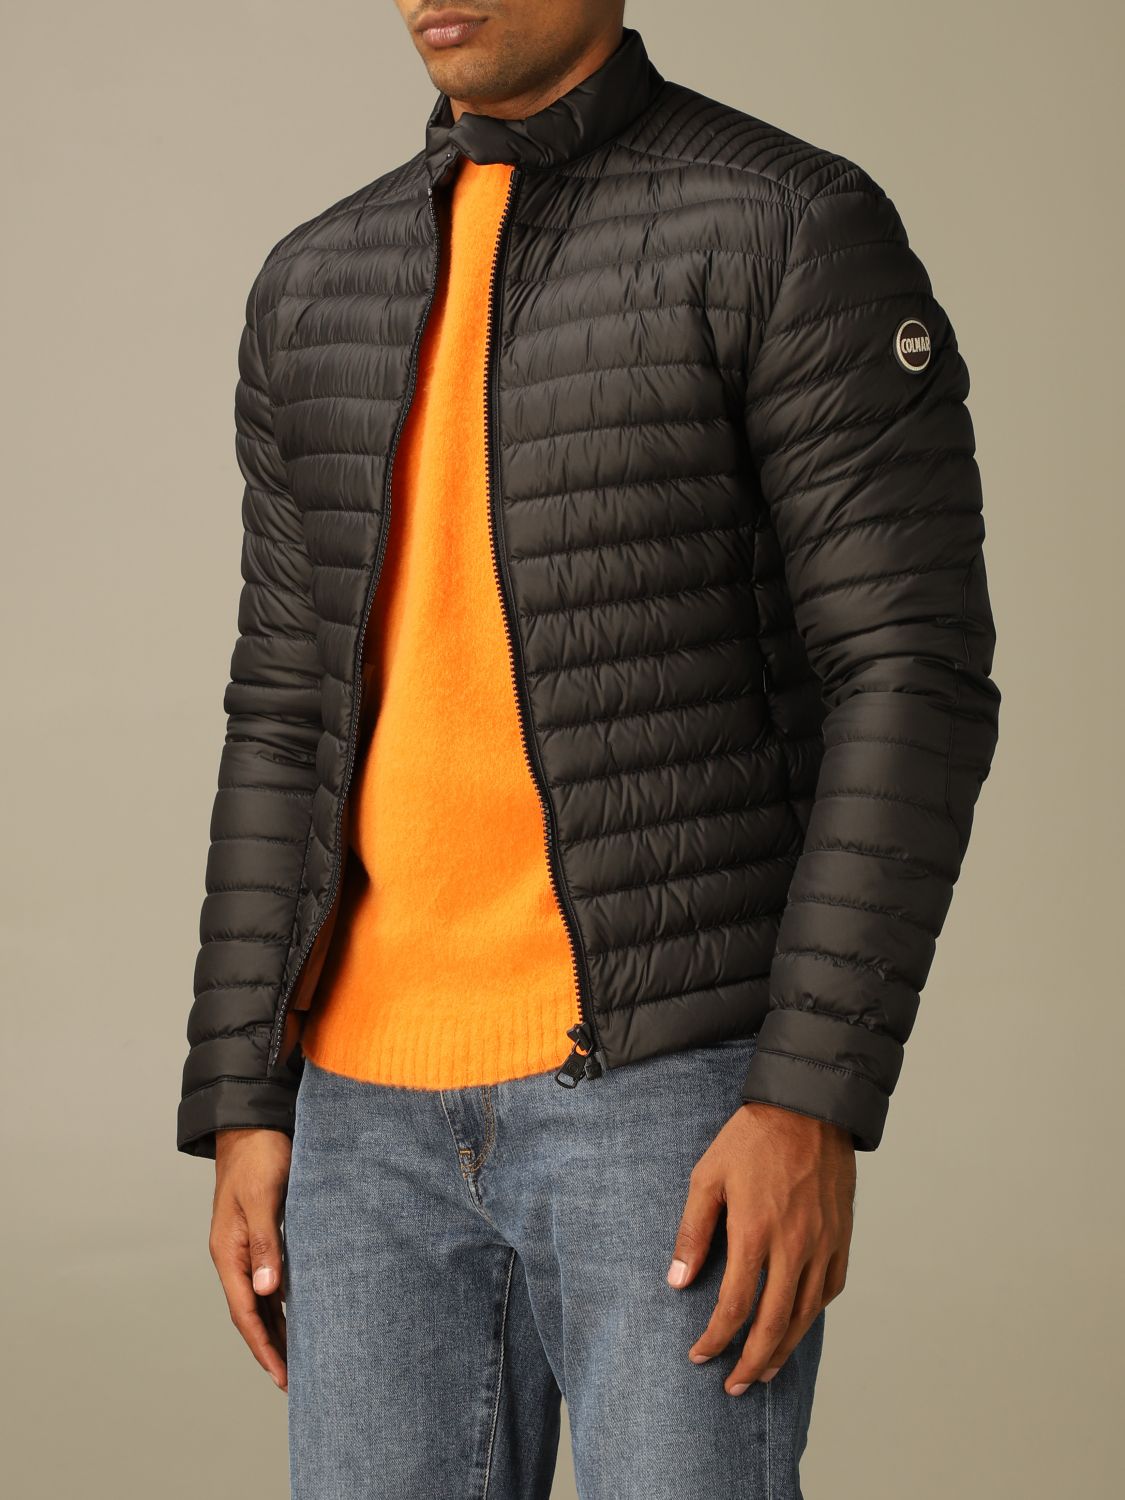 Bevoorrecht Beyond loterij Colmar Outlet: down jacket in nylon 100 grams - Black | Colmar jacket 1221R  8RQ online on GIGLIO.COM